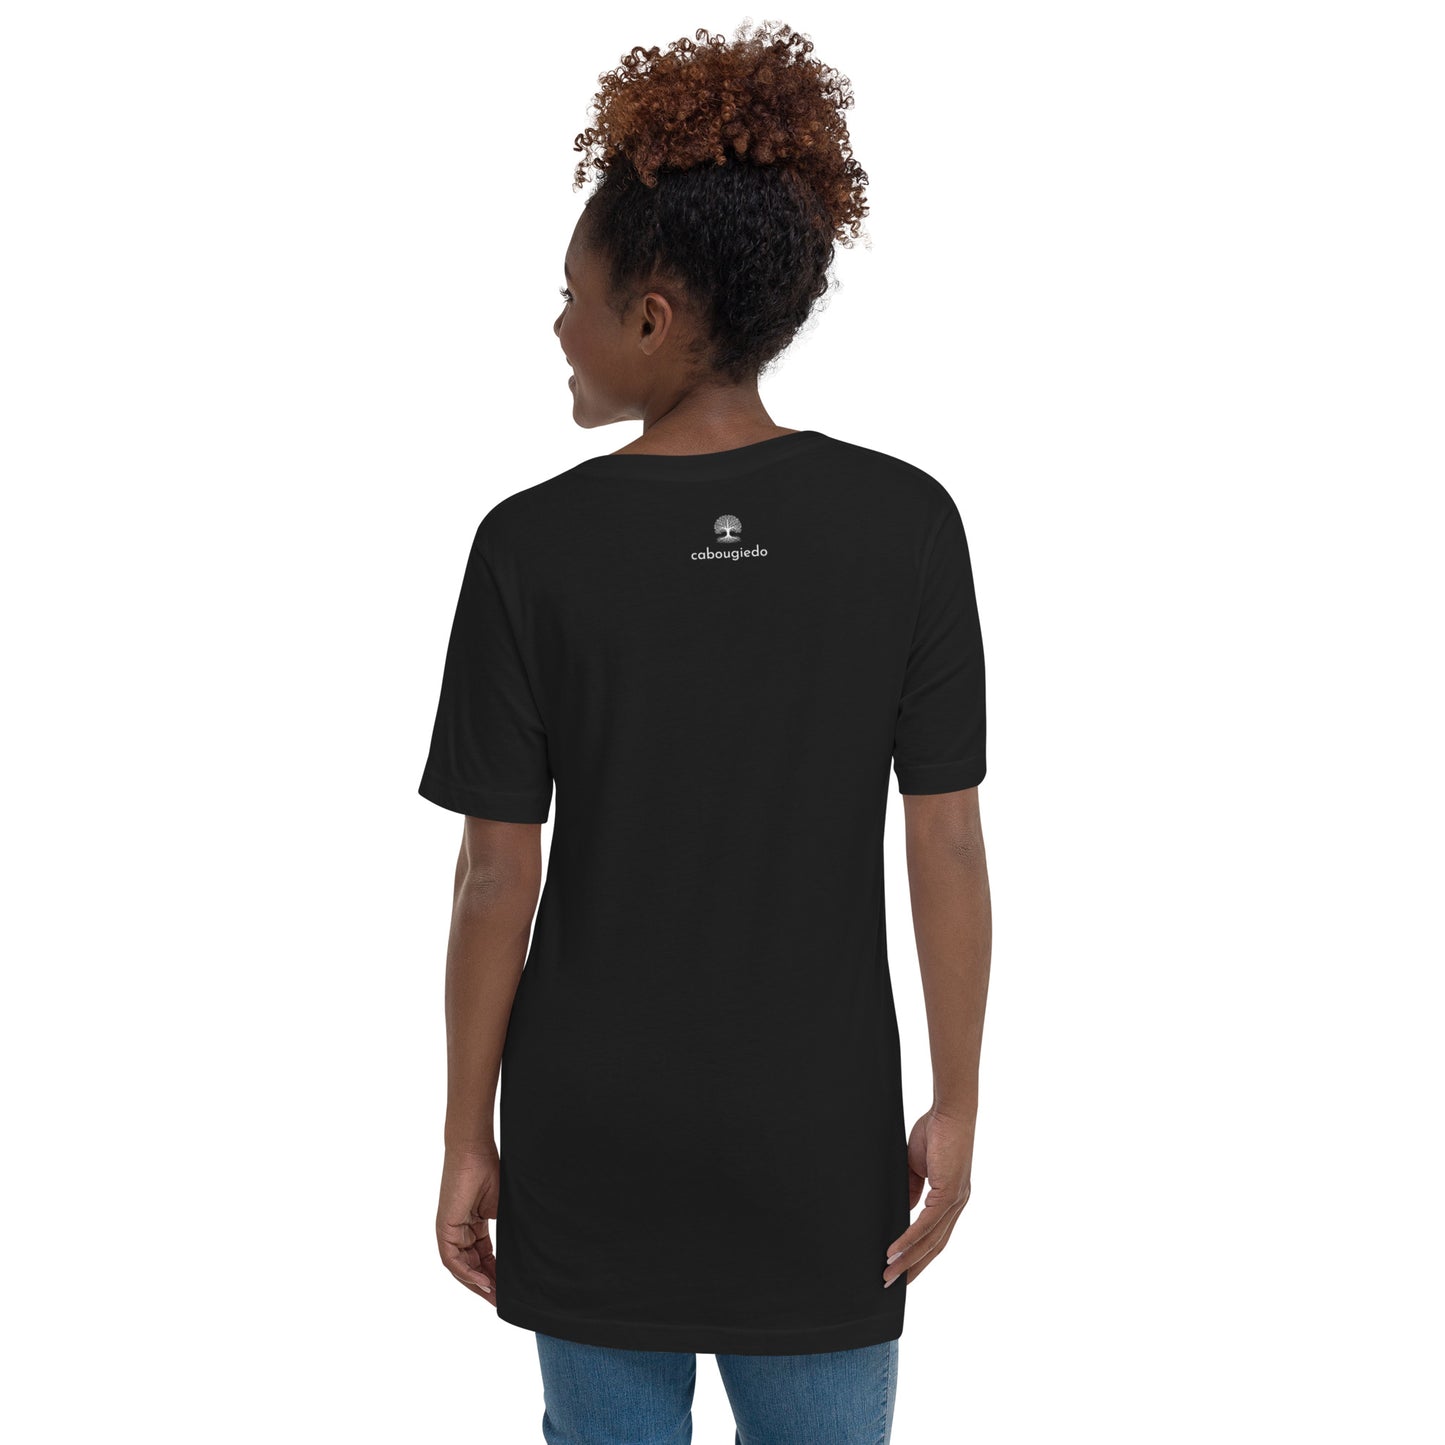 Women's Short Sleeve V-Neck T-Shirt - Leo Afro Queen